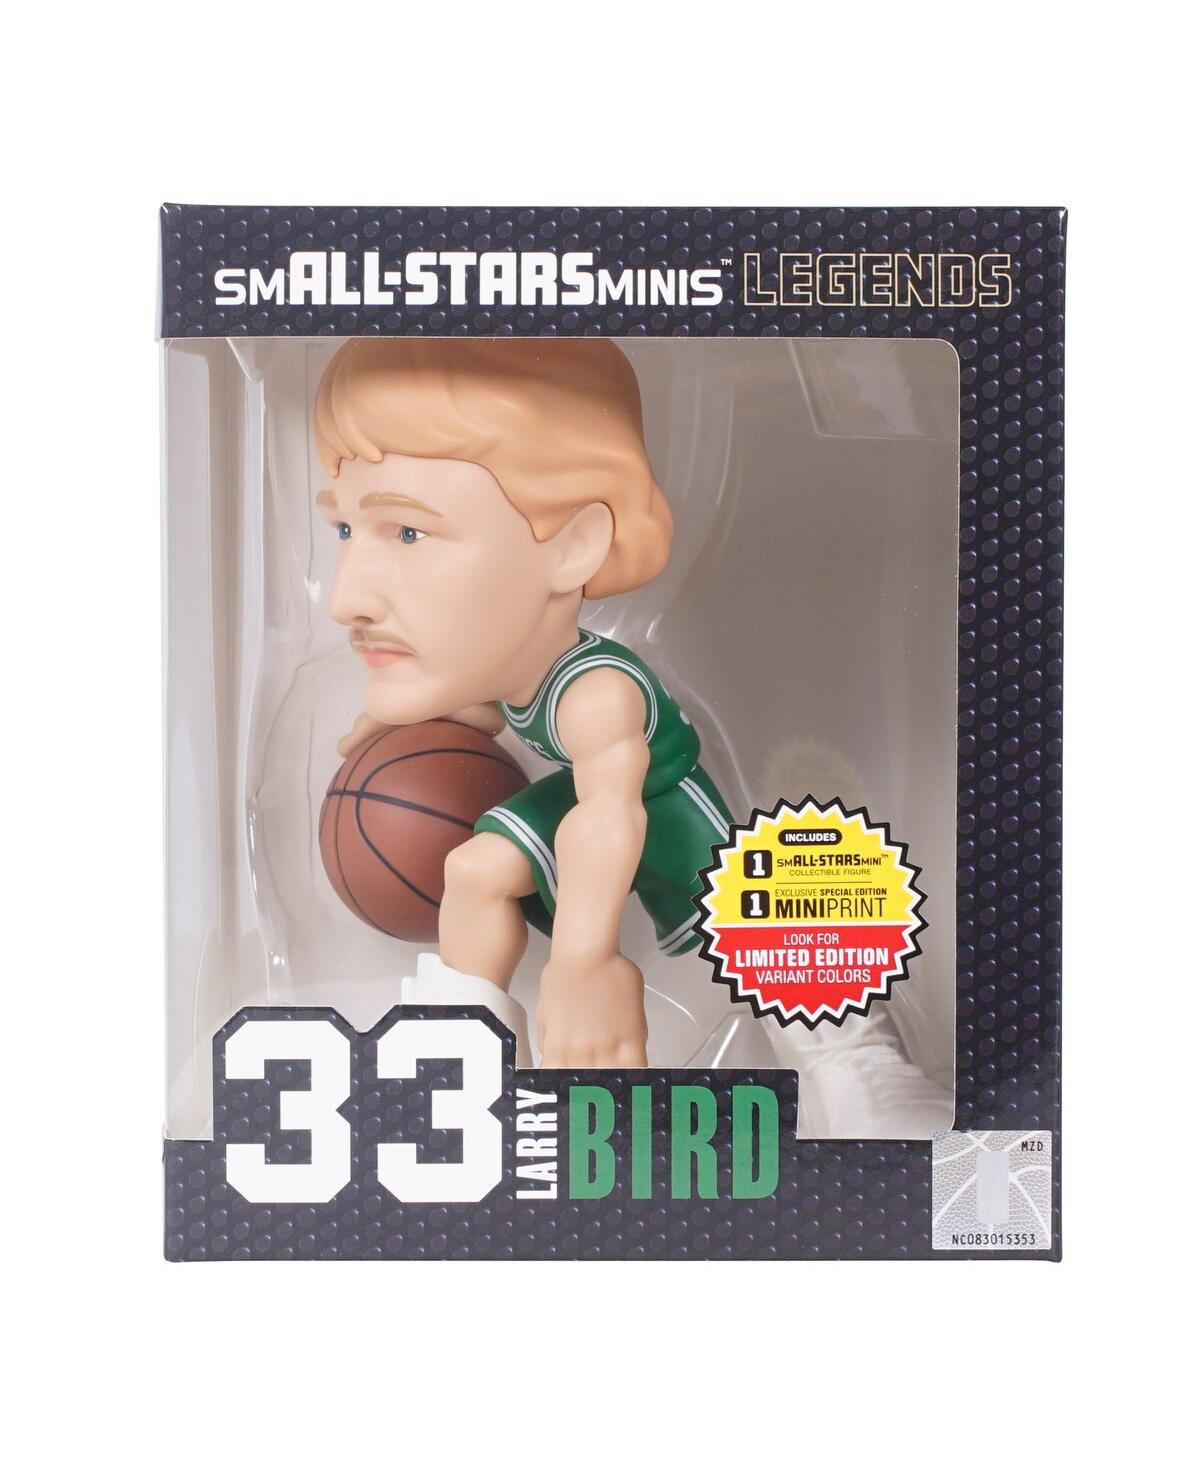 Small-stars Larry Bird Boston Celtics  Minis 6" Vinyl Figurine In Green